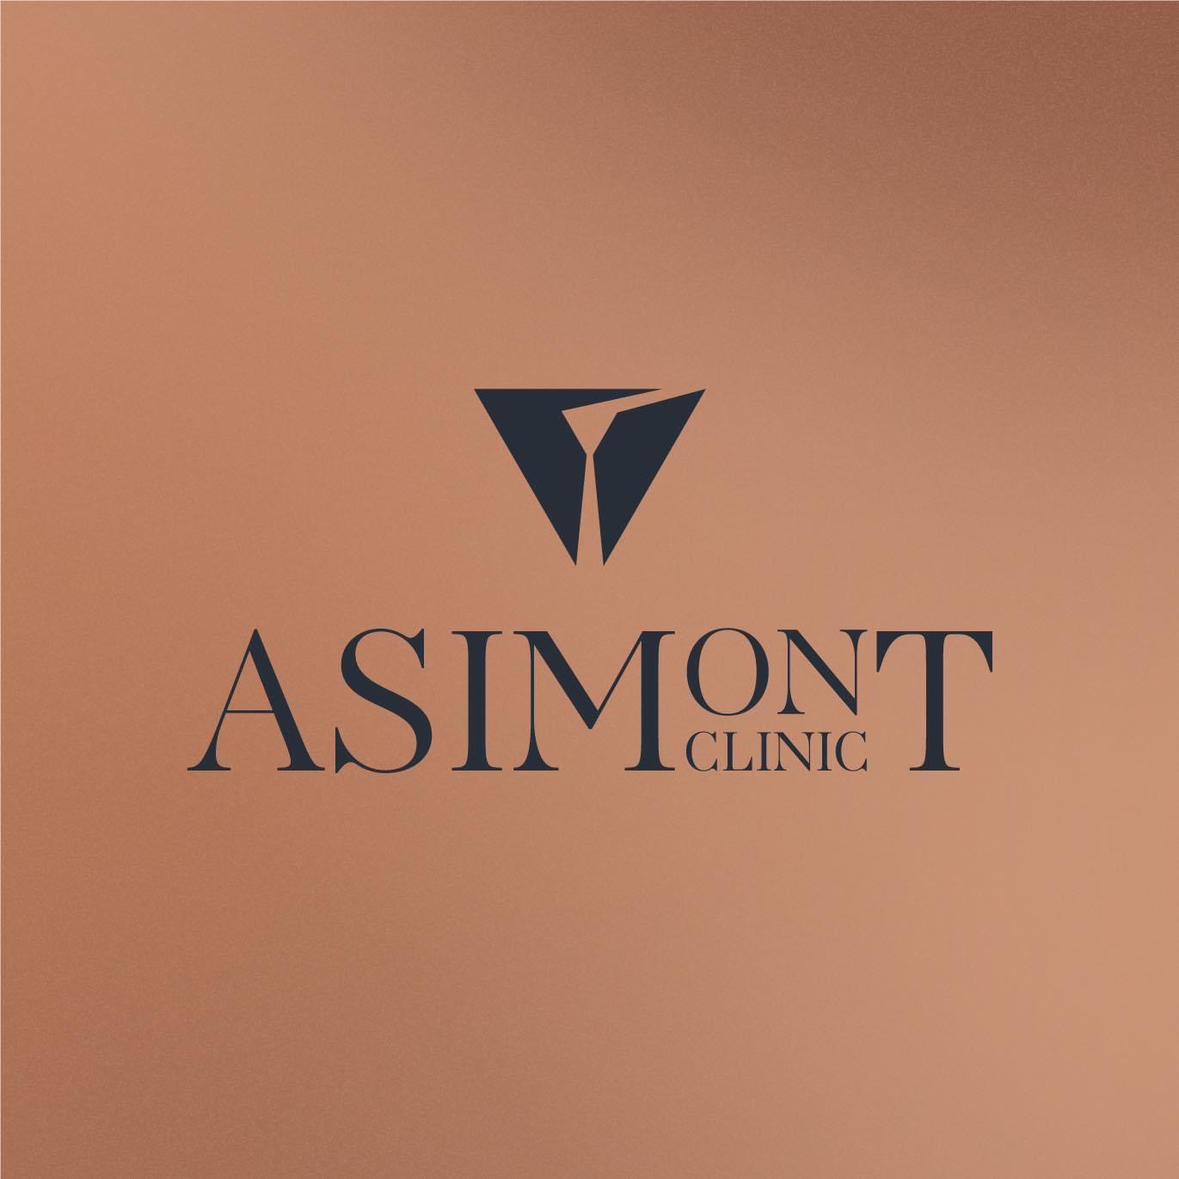 Asimont Clinic